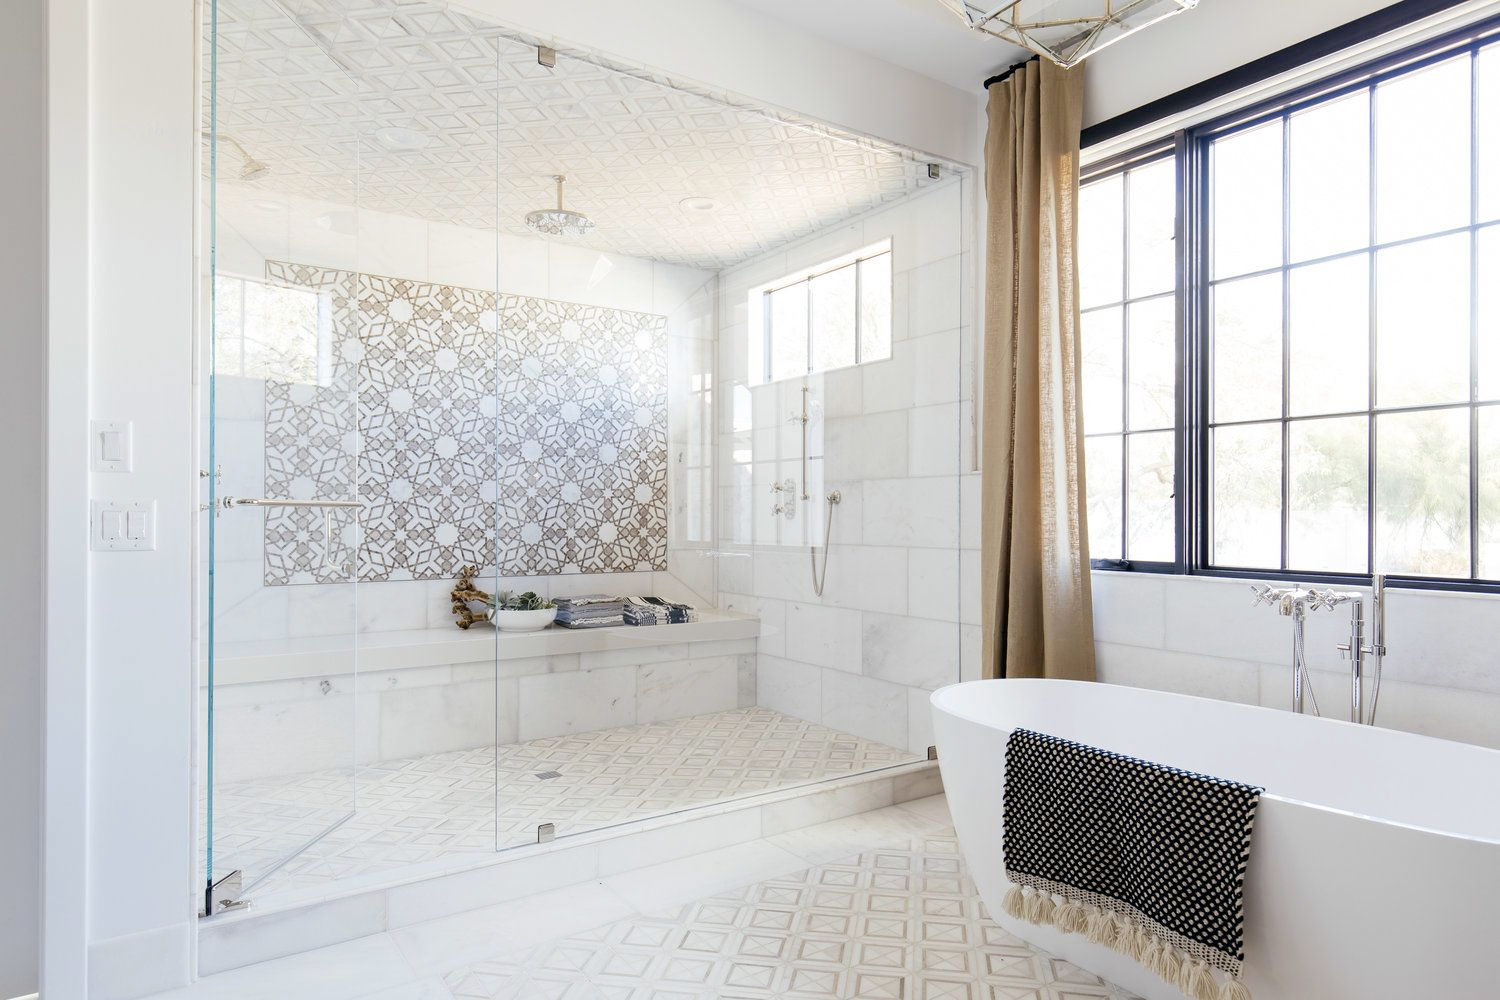 Southern Materials Bathroom Remodel, Bathtub In Shower Designs